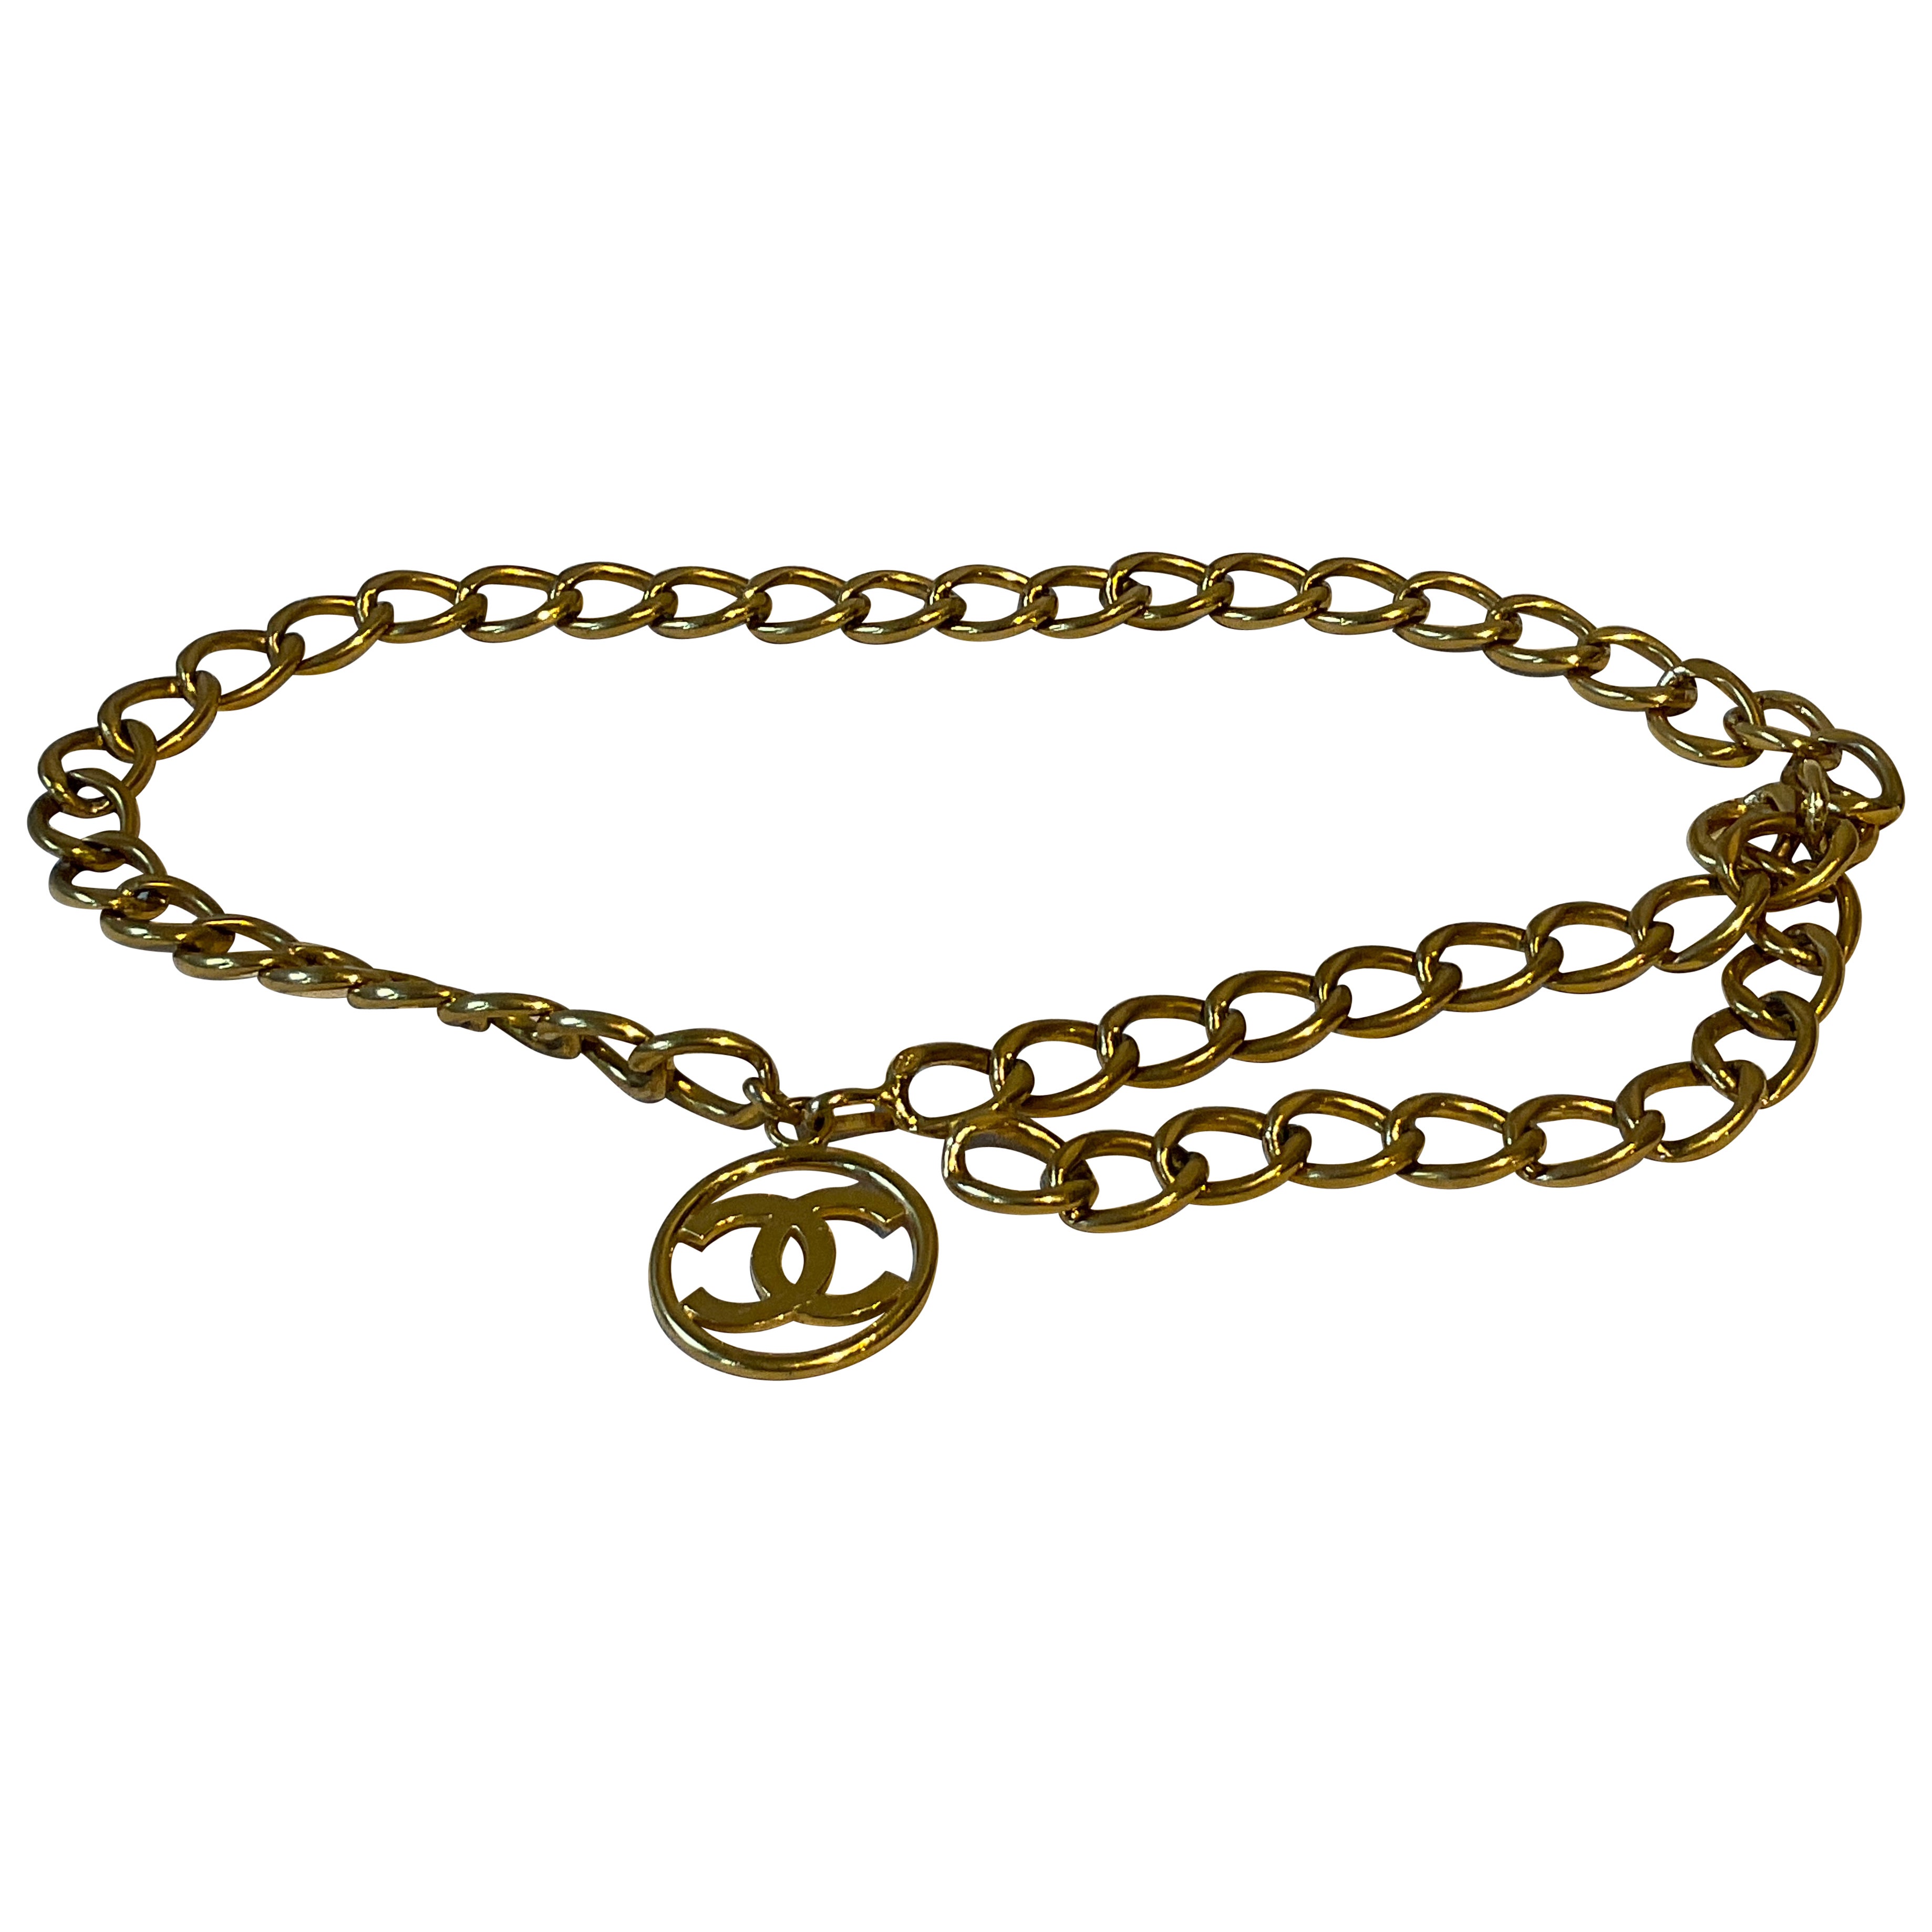 1990s Chanel Chain link   Belt